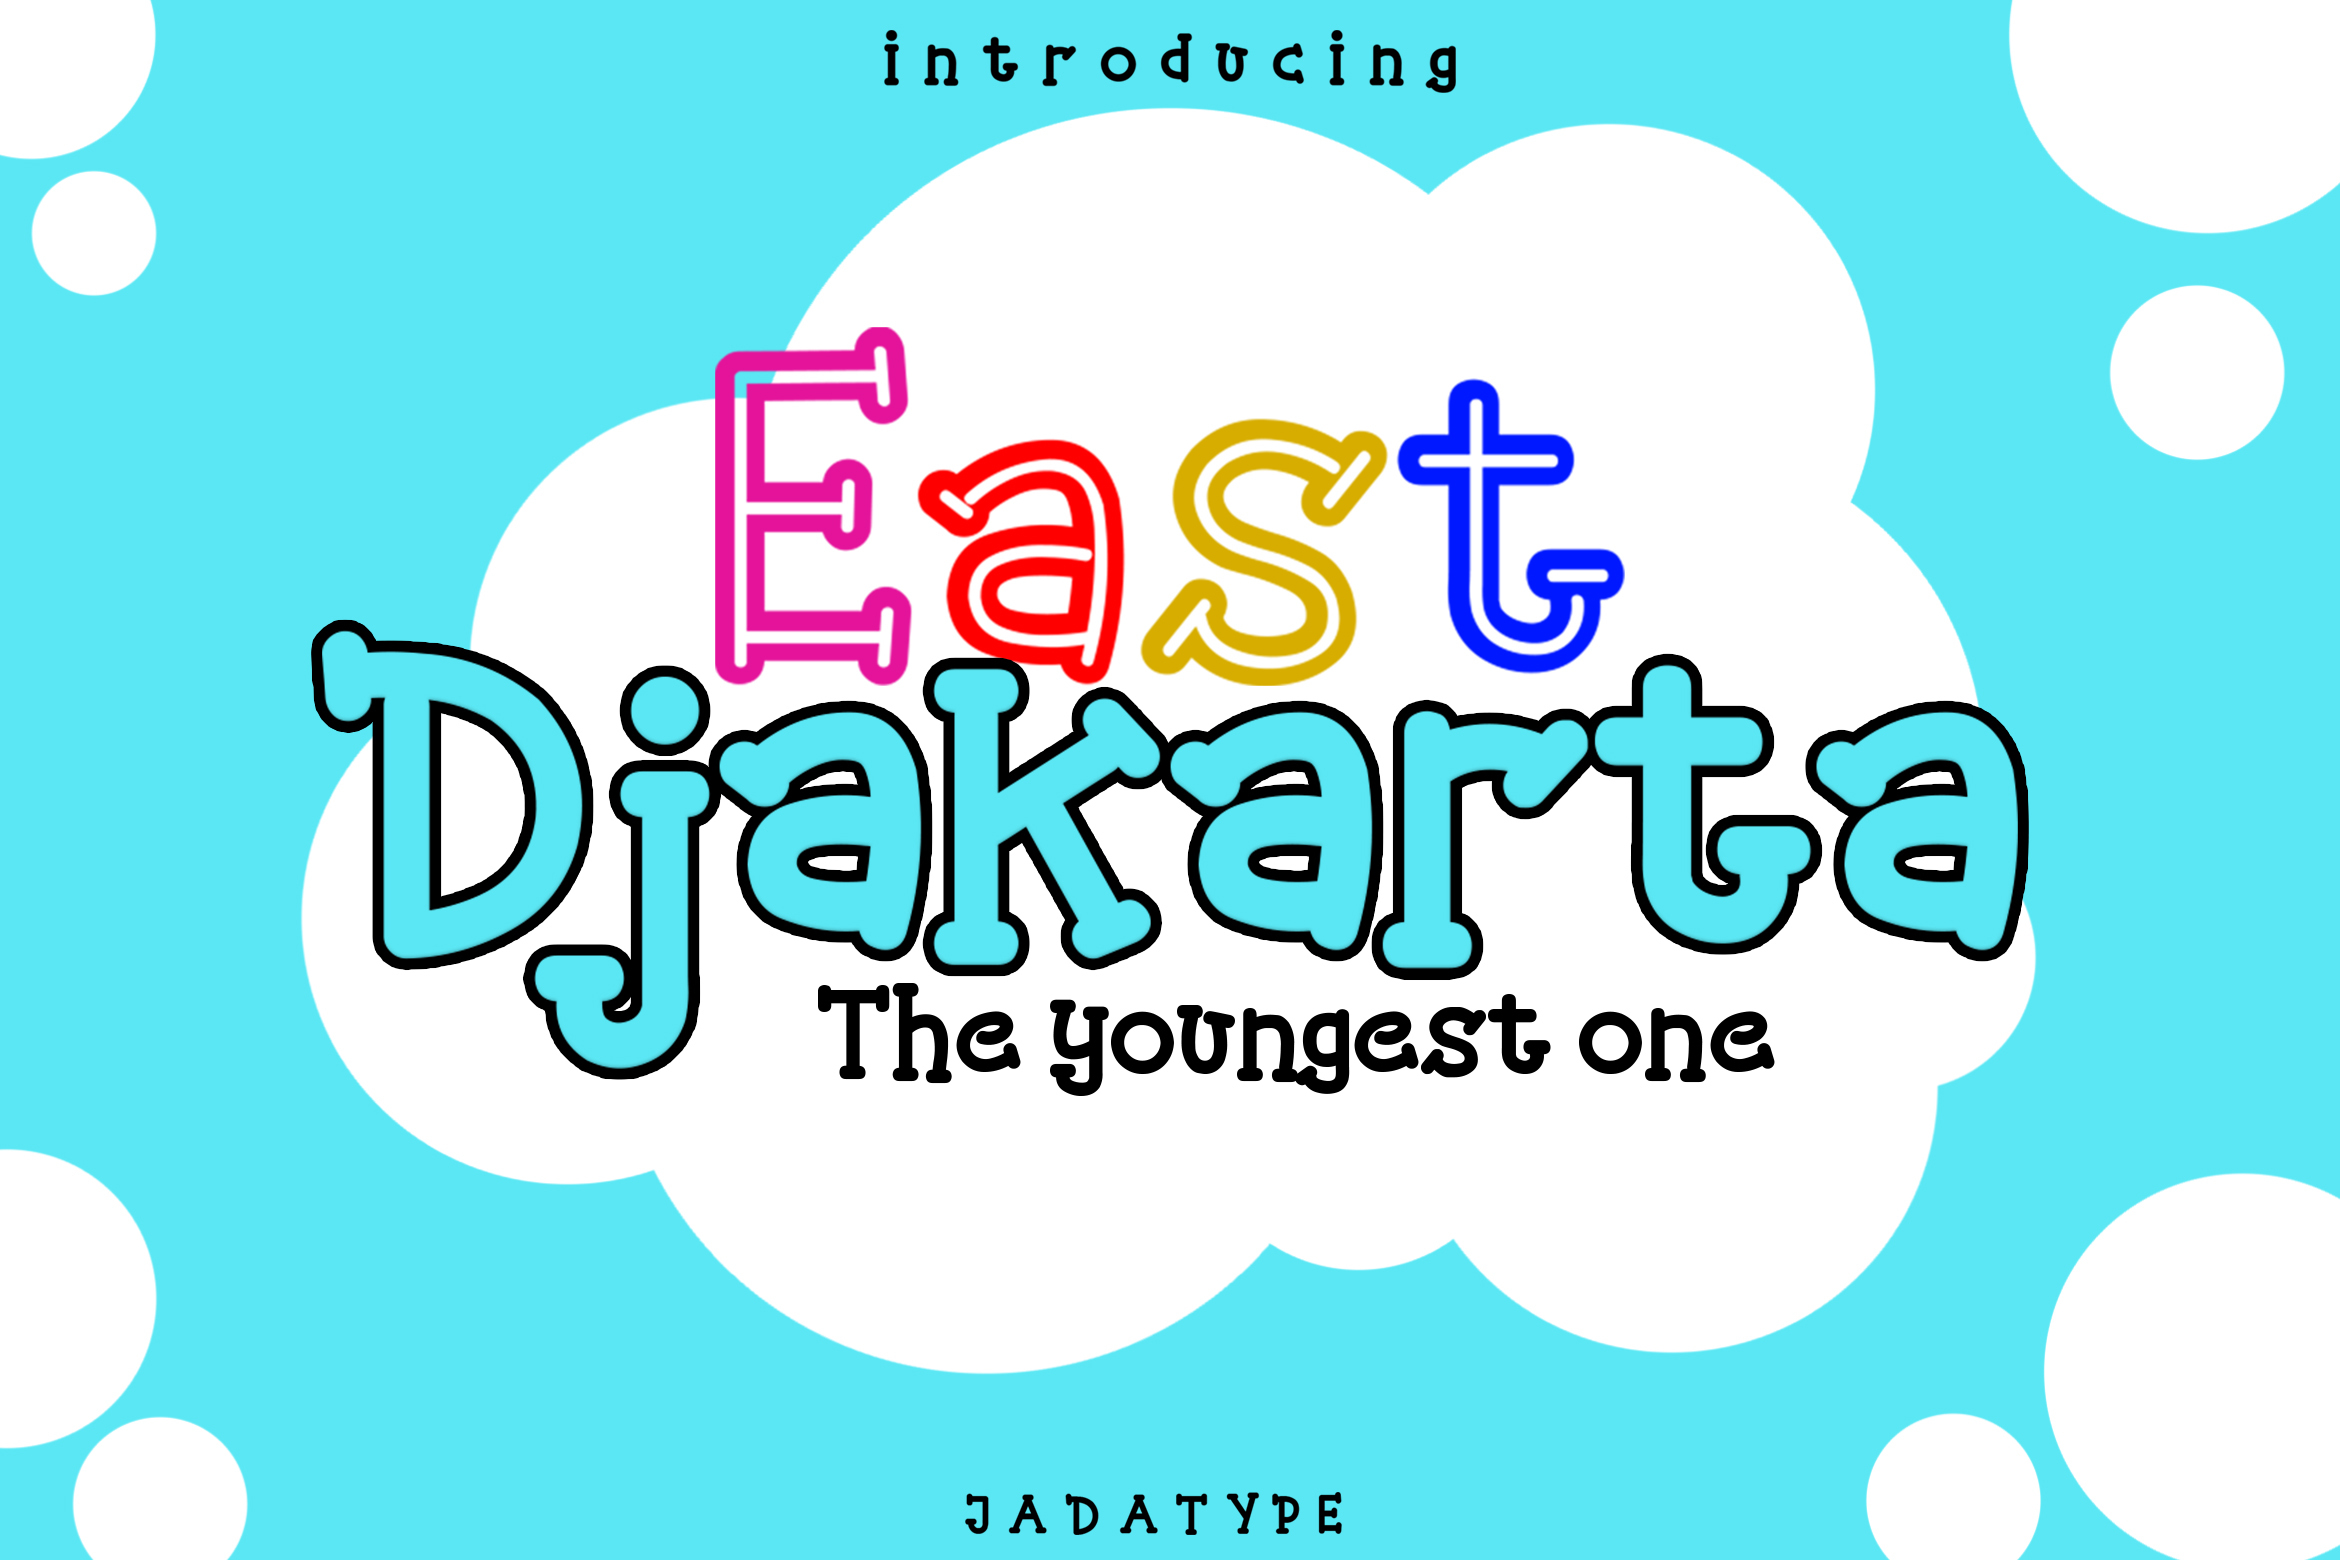 East Djakarta